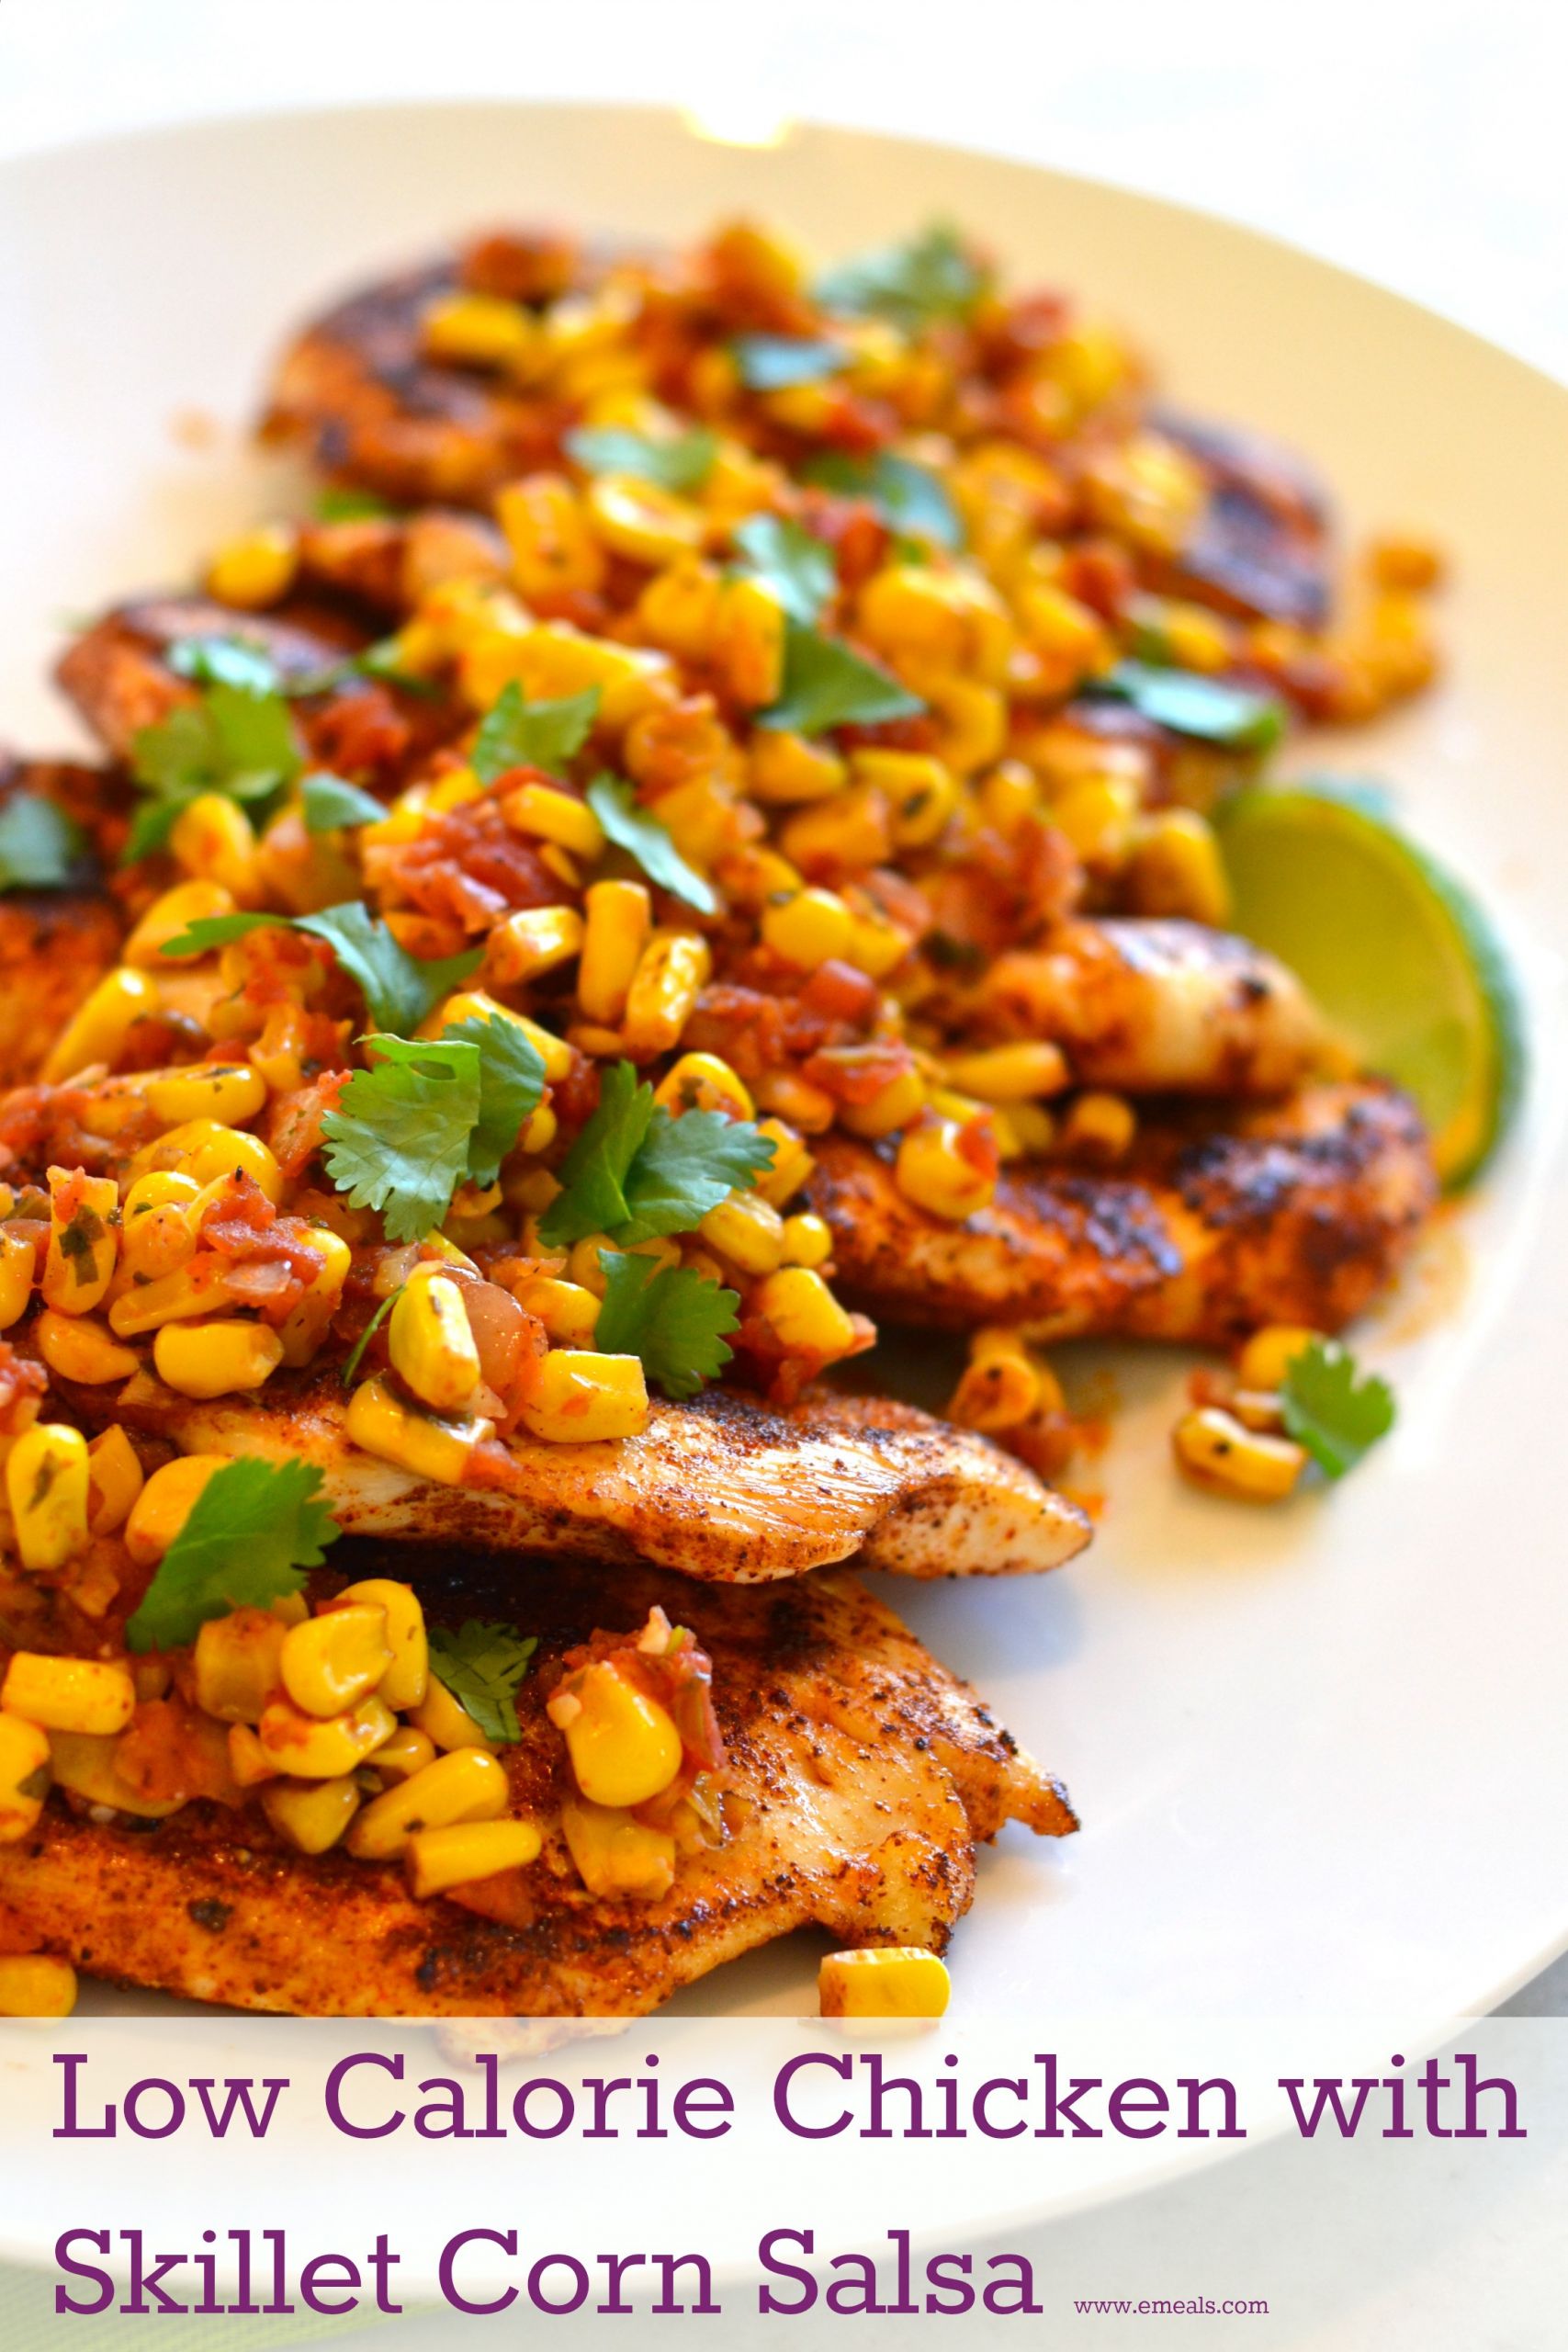 Low Calorie Chicken Dinner Recipes Inspirational Low Calorie Dinner Recipe Spicy Chicken with Skillet Corn